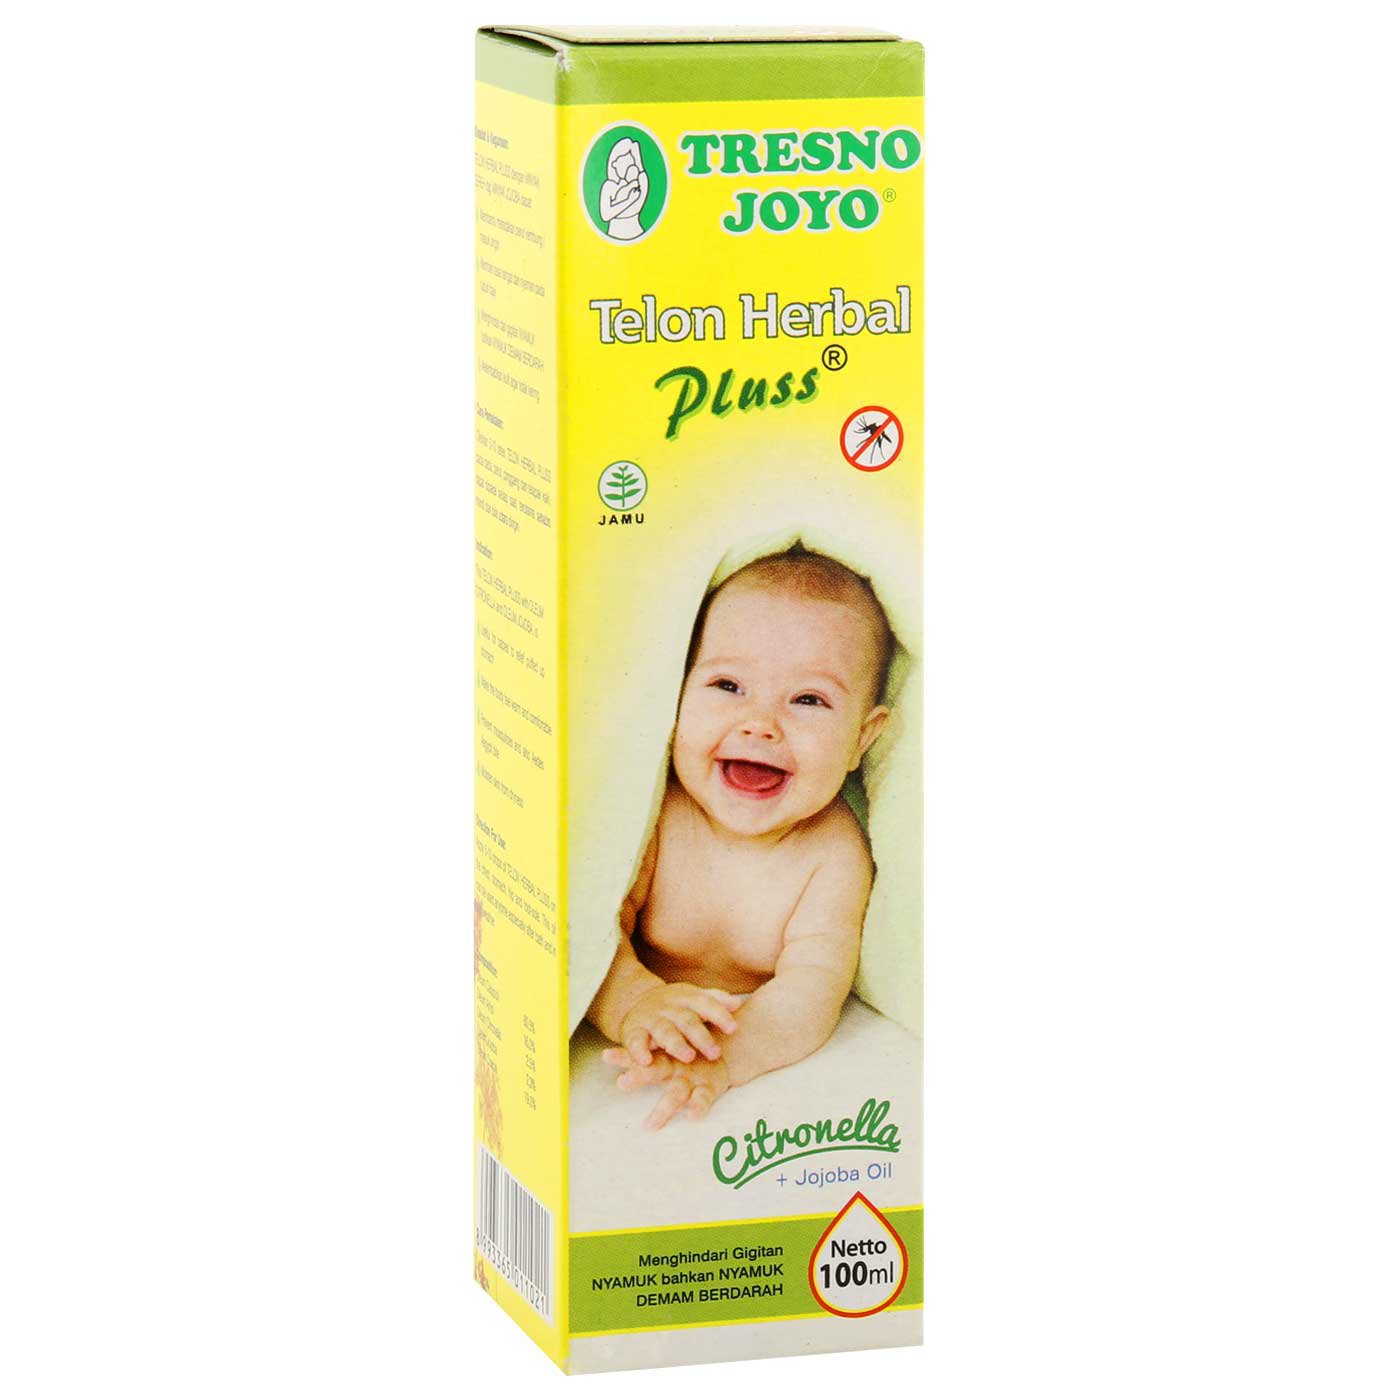 Tresno Joyo Citronella Telon Oil - 100ml - Pack of 4